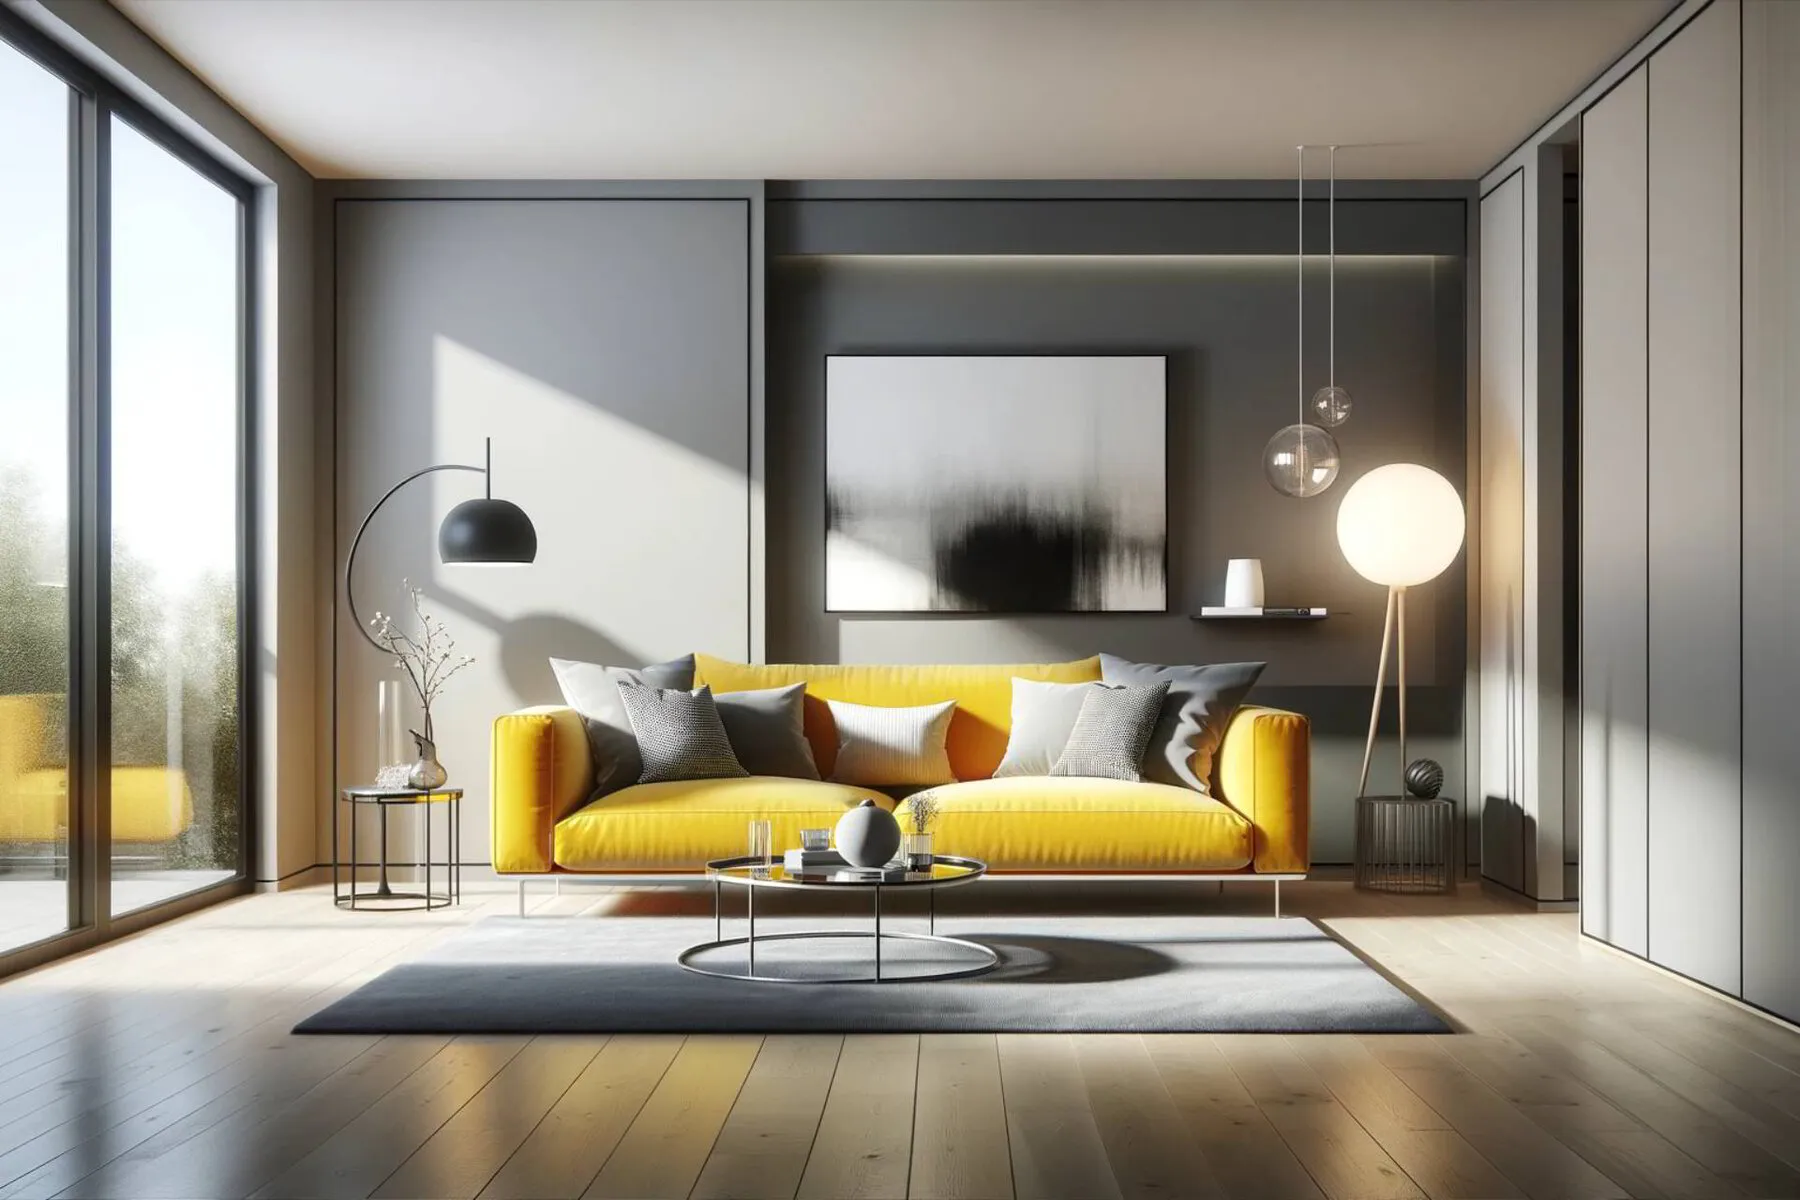 modern interior design image highlighting the principle of emphasis